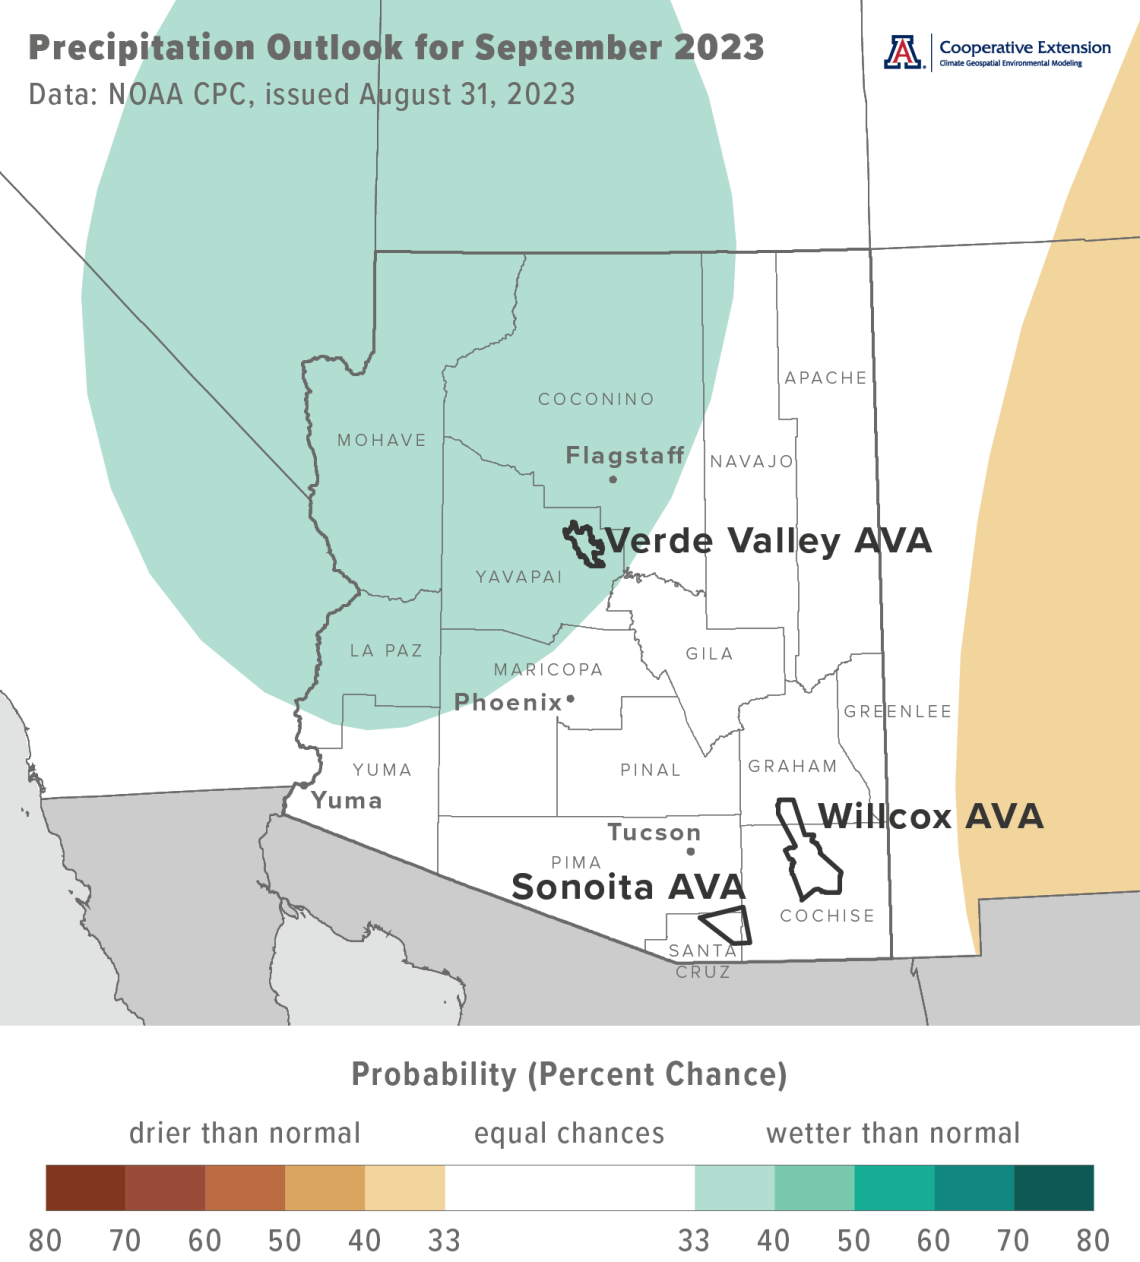 September 2023 precipitation outlook map for Arizona